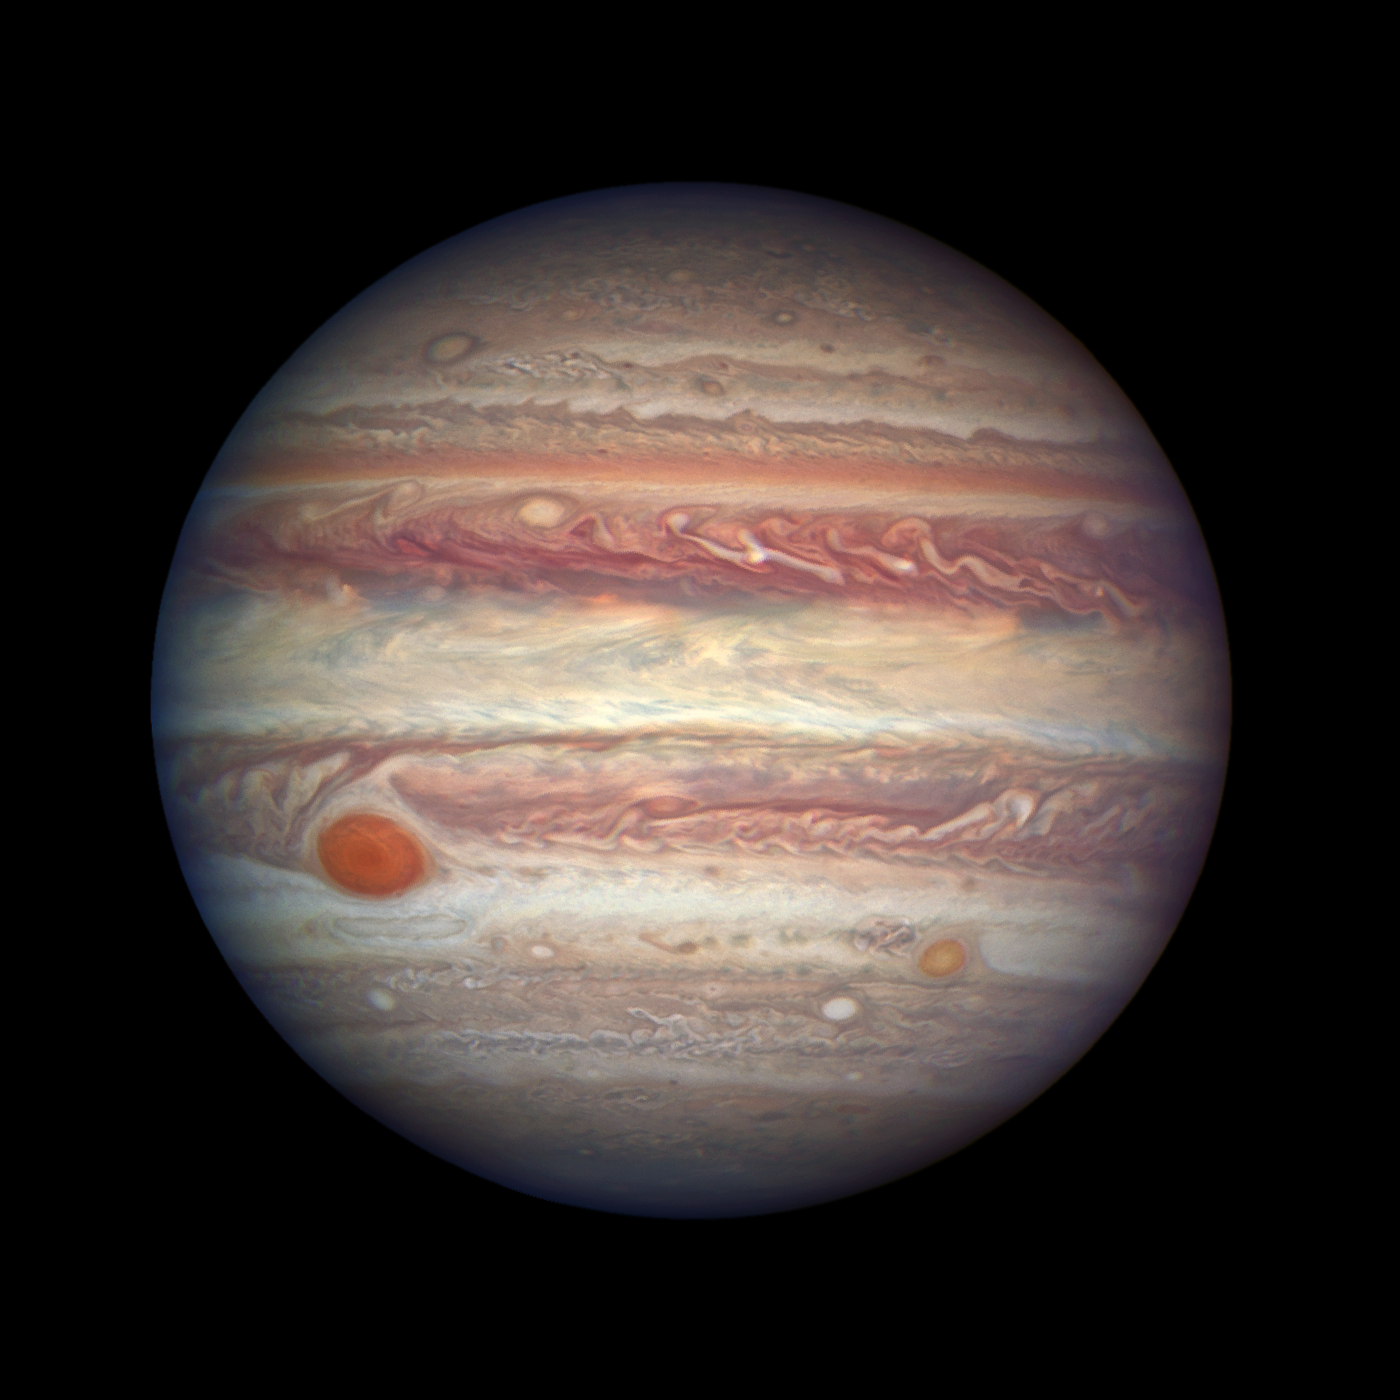 Jupiter image taken by Hubble Space Telescope